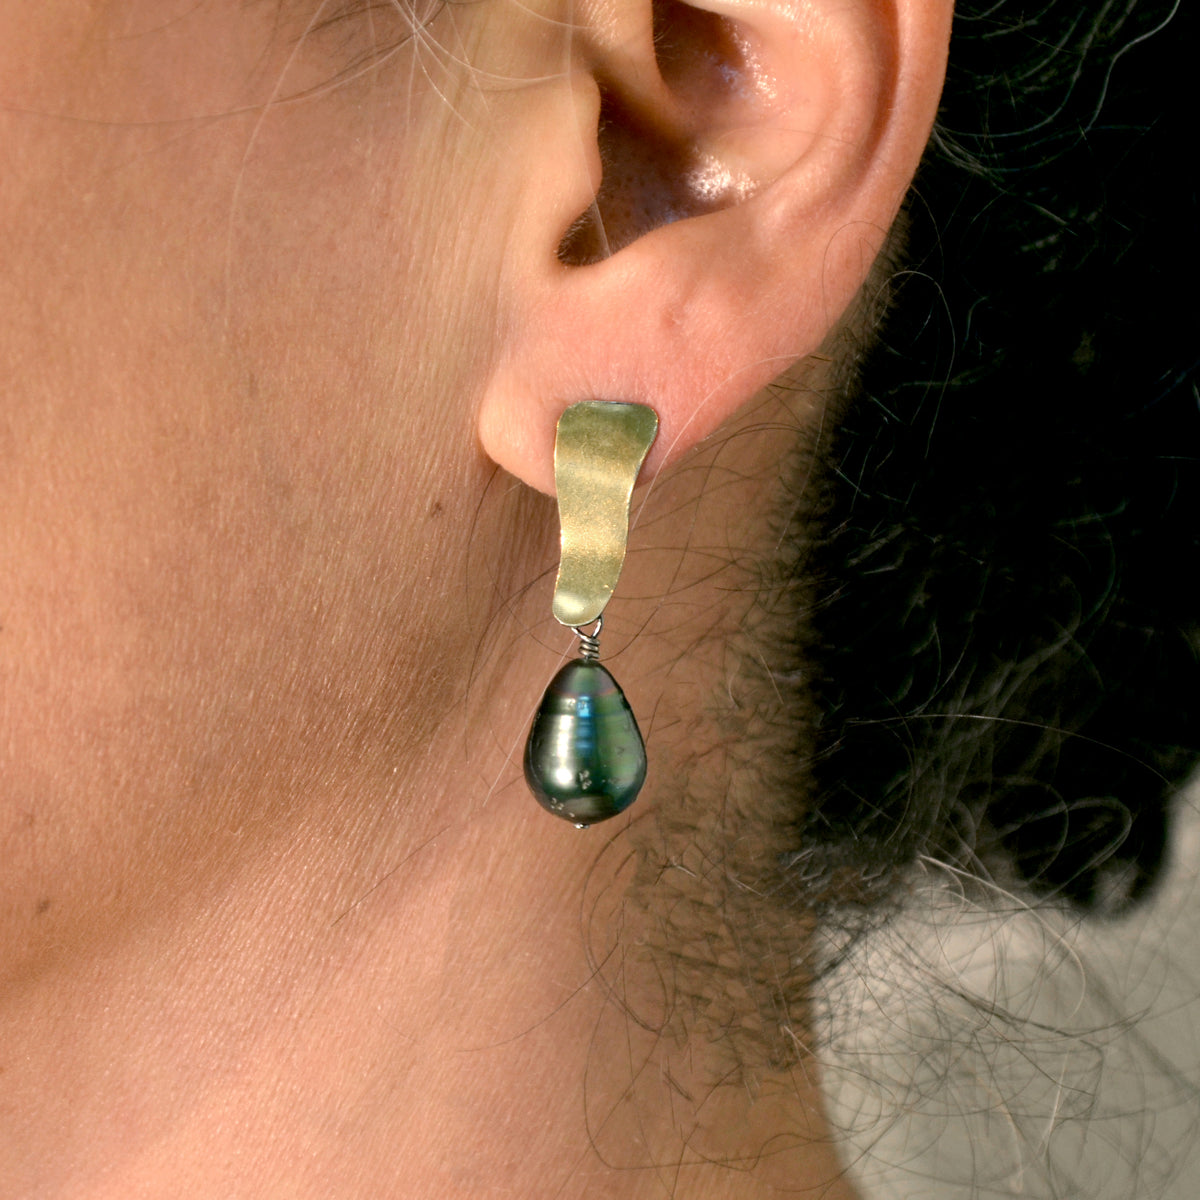 Suzanne Schwartz wearing 22k Short Pearl Hanging Earrings with Tahitian Pearls